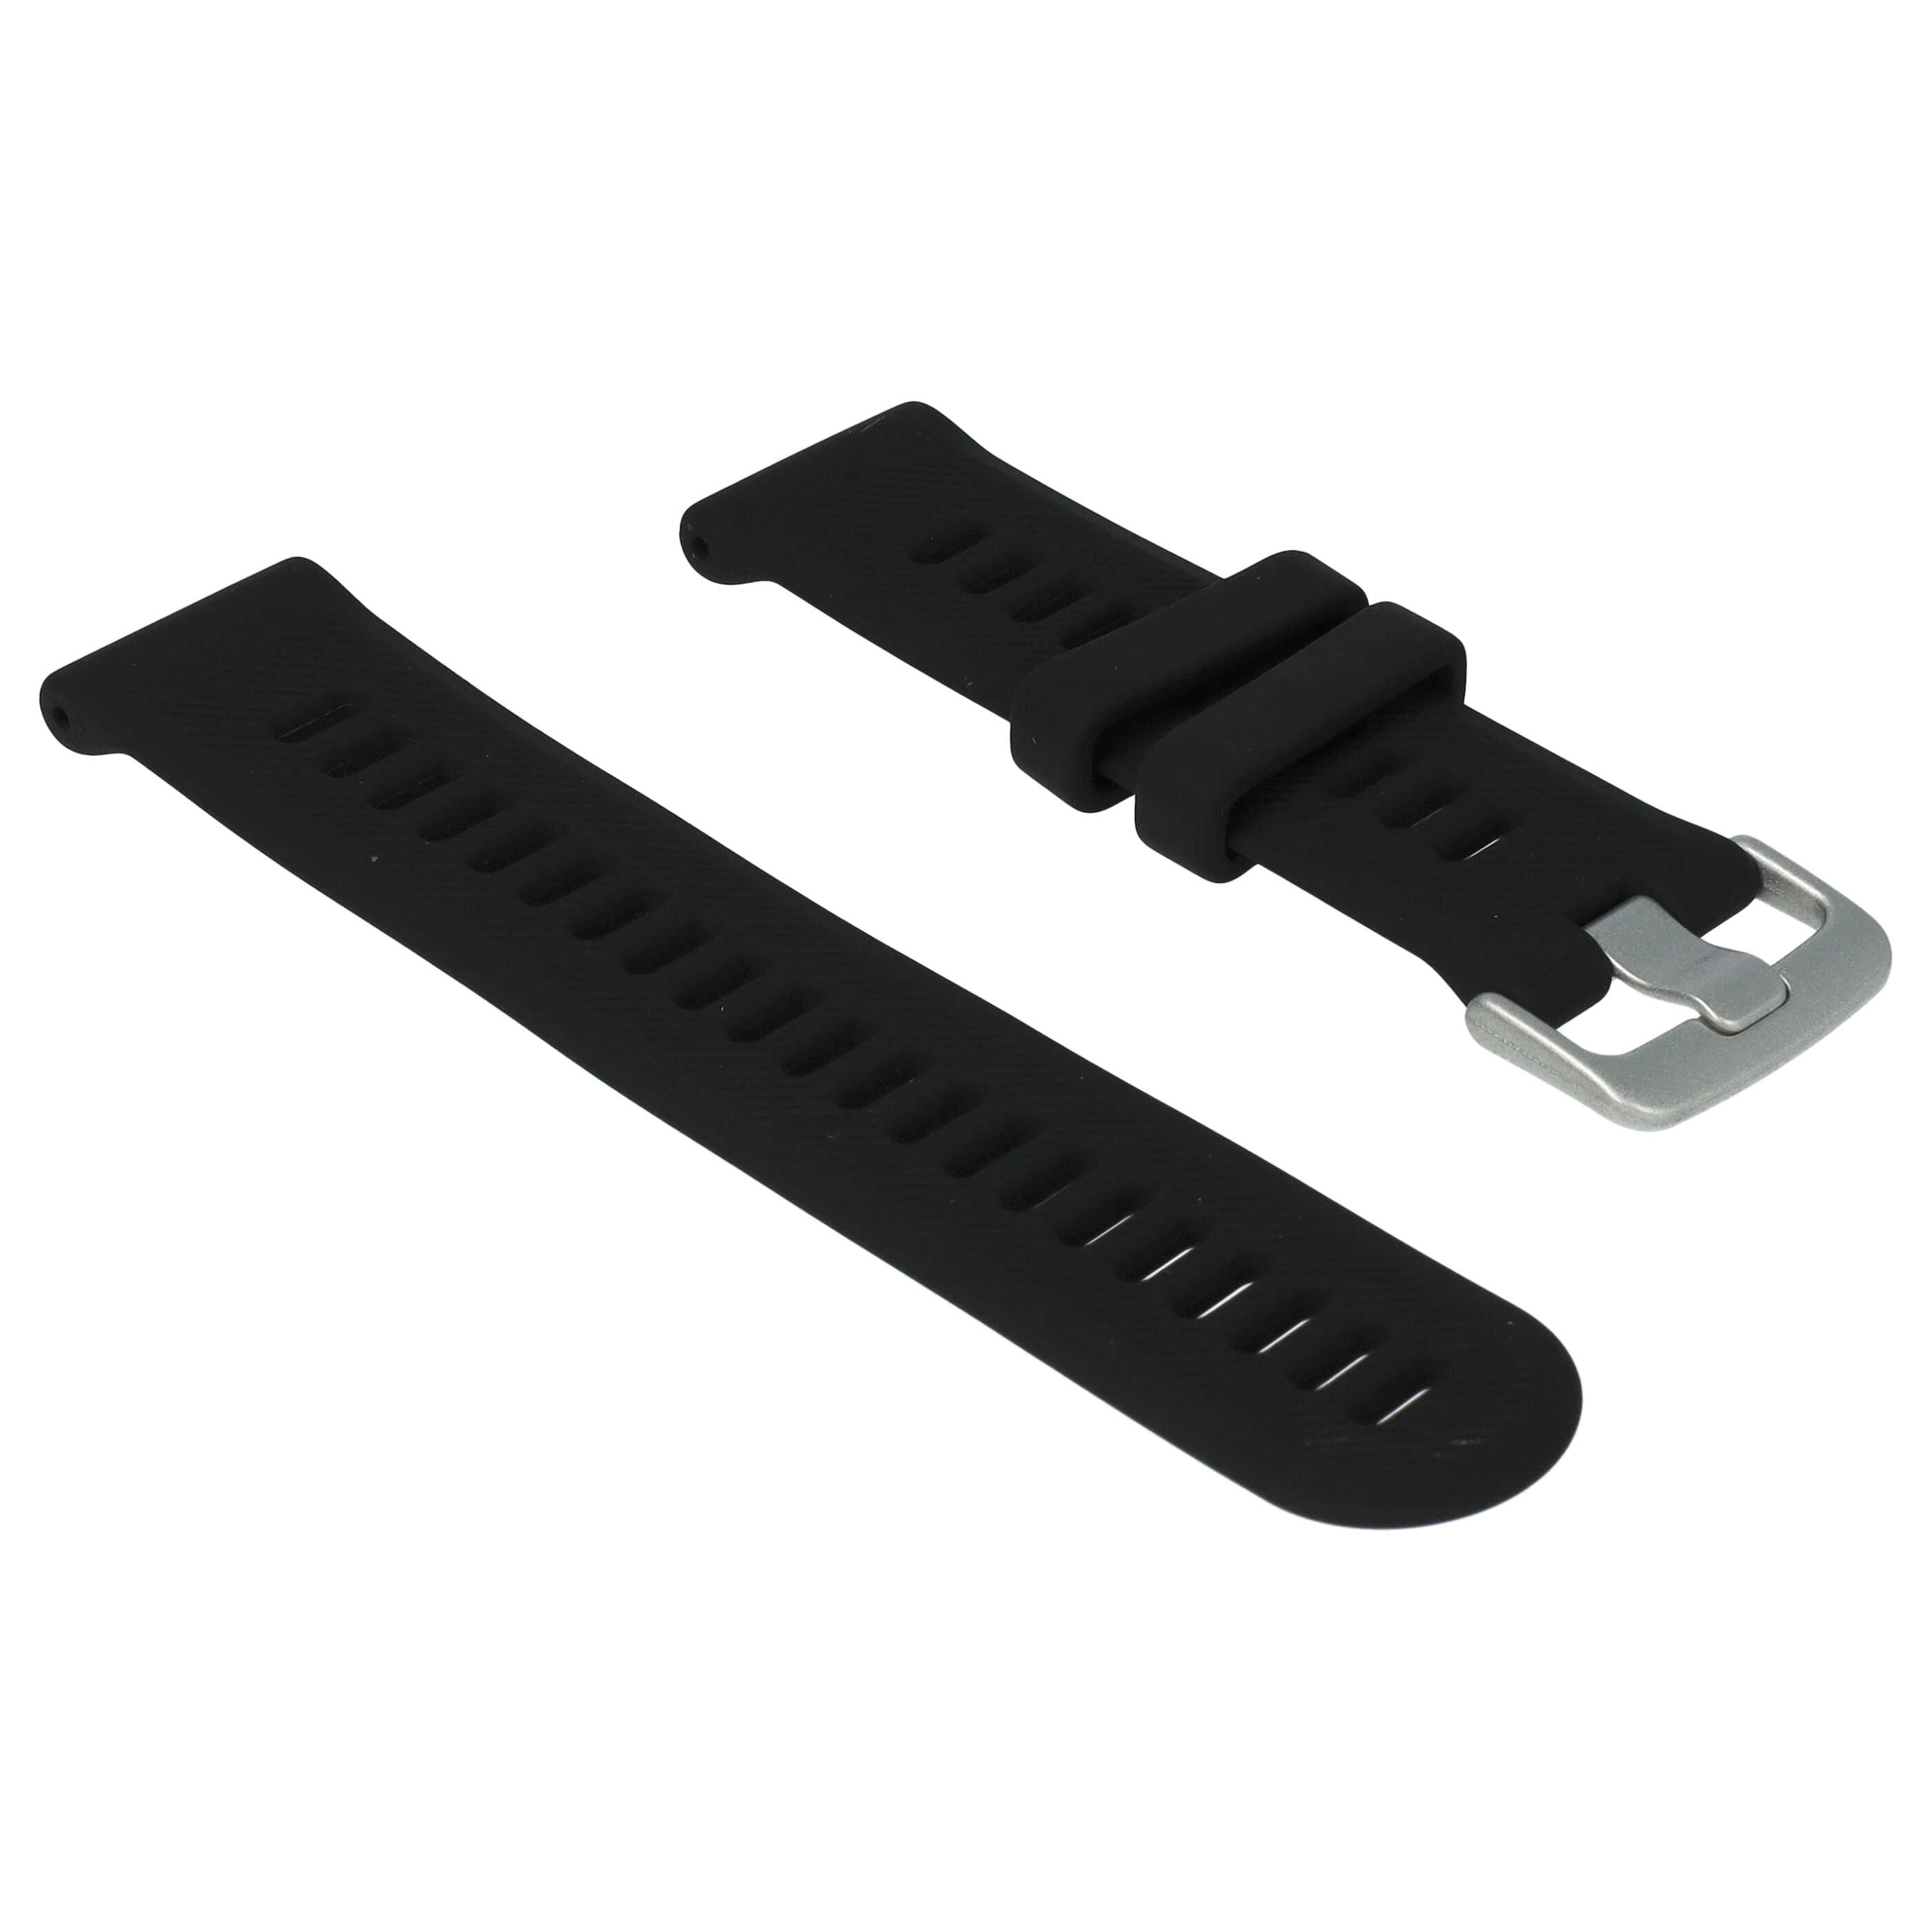 Pasek do smartwatch Garmin Forerunner - dł. 9 + 12,2 cm, szer. 22 mm, silikon, czarny